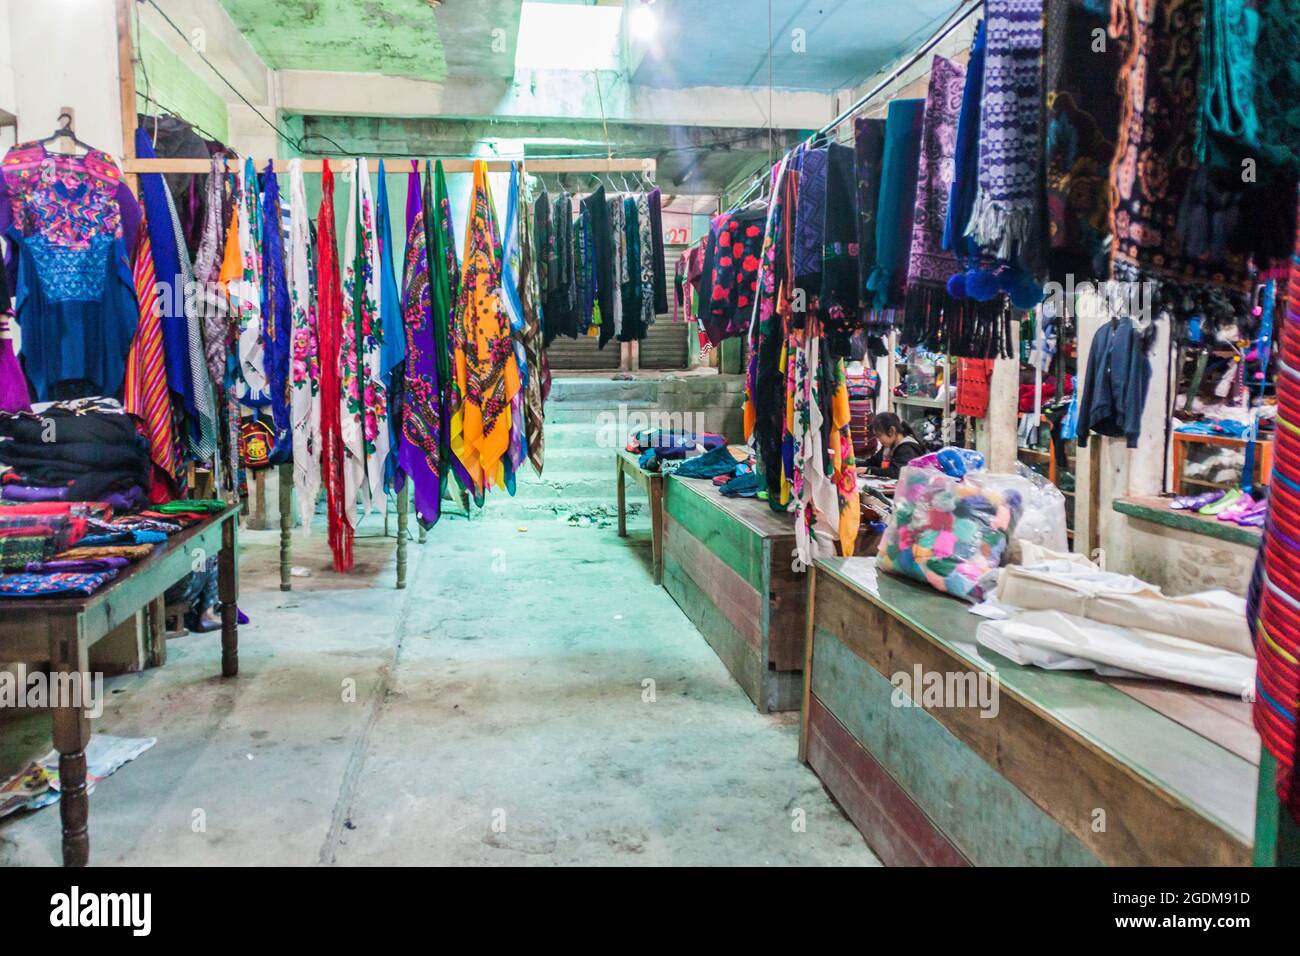 SAN MATEO IXTATAN, GUATEMALA, MARCH 19, 2016: Clothes stalls on a market in San Mateo Ixtatan village. Stock Photo